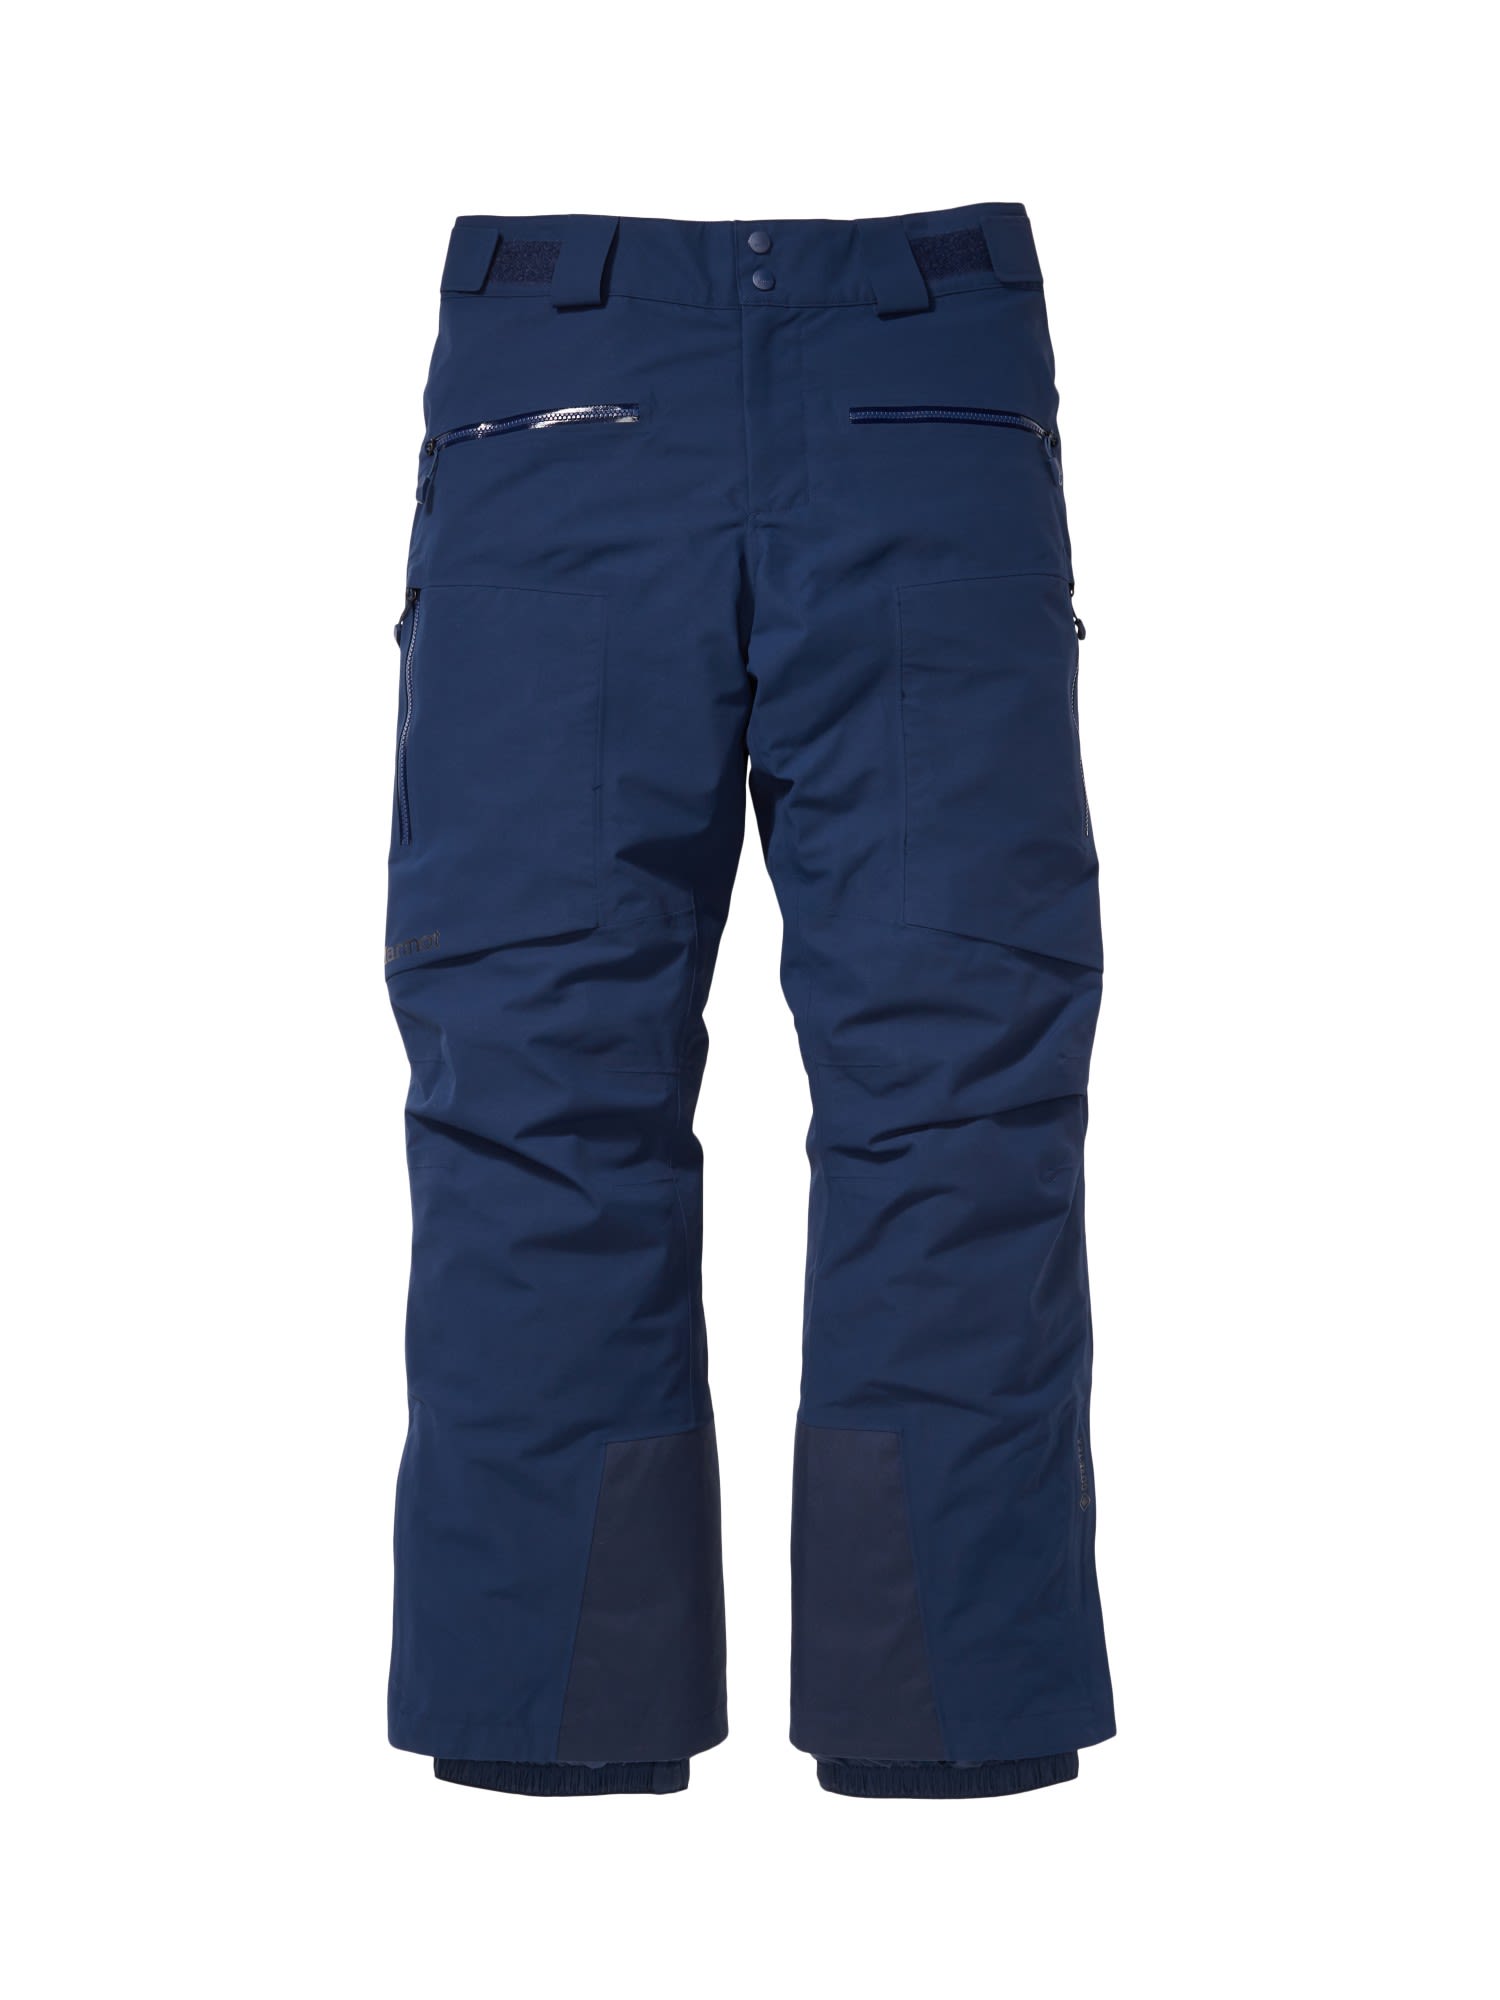 Marmot Freerider Pant Blau- Male Gore-Tex(R) Lange Hosen- Grsse S - Farbe Arctic Navy